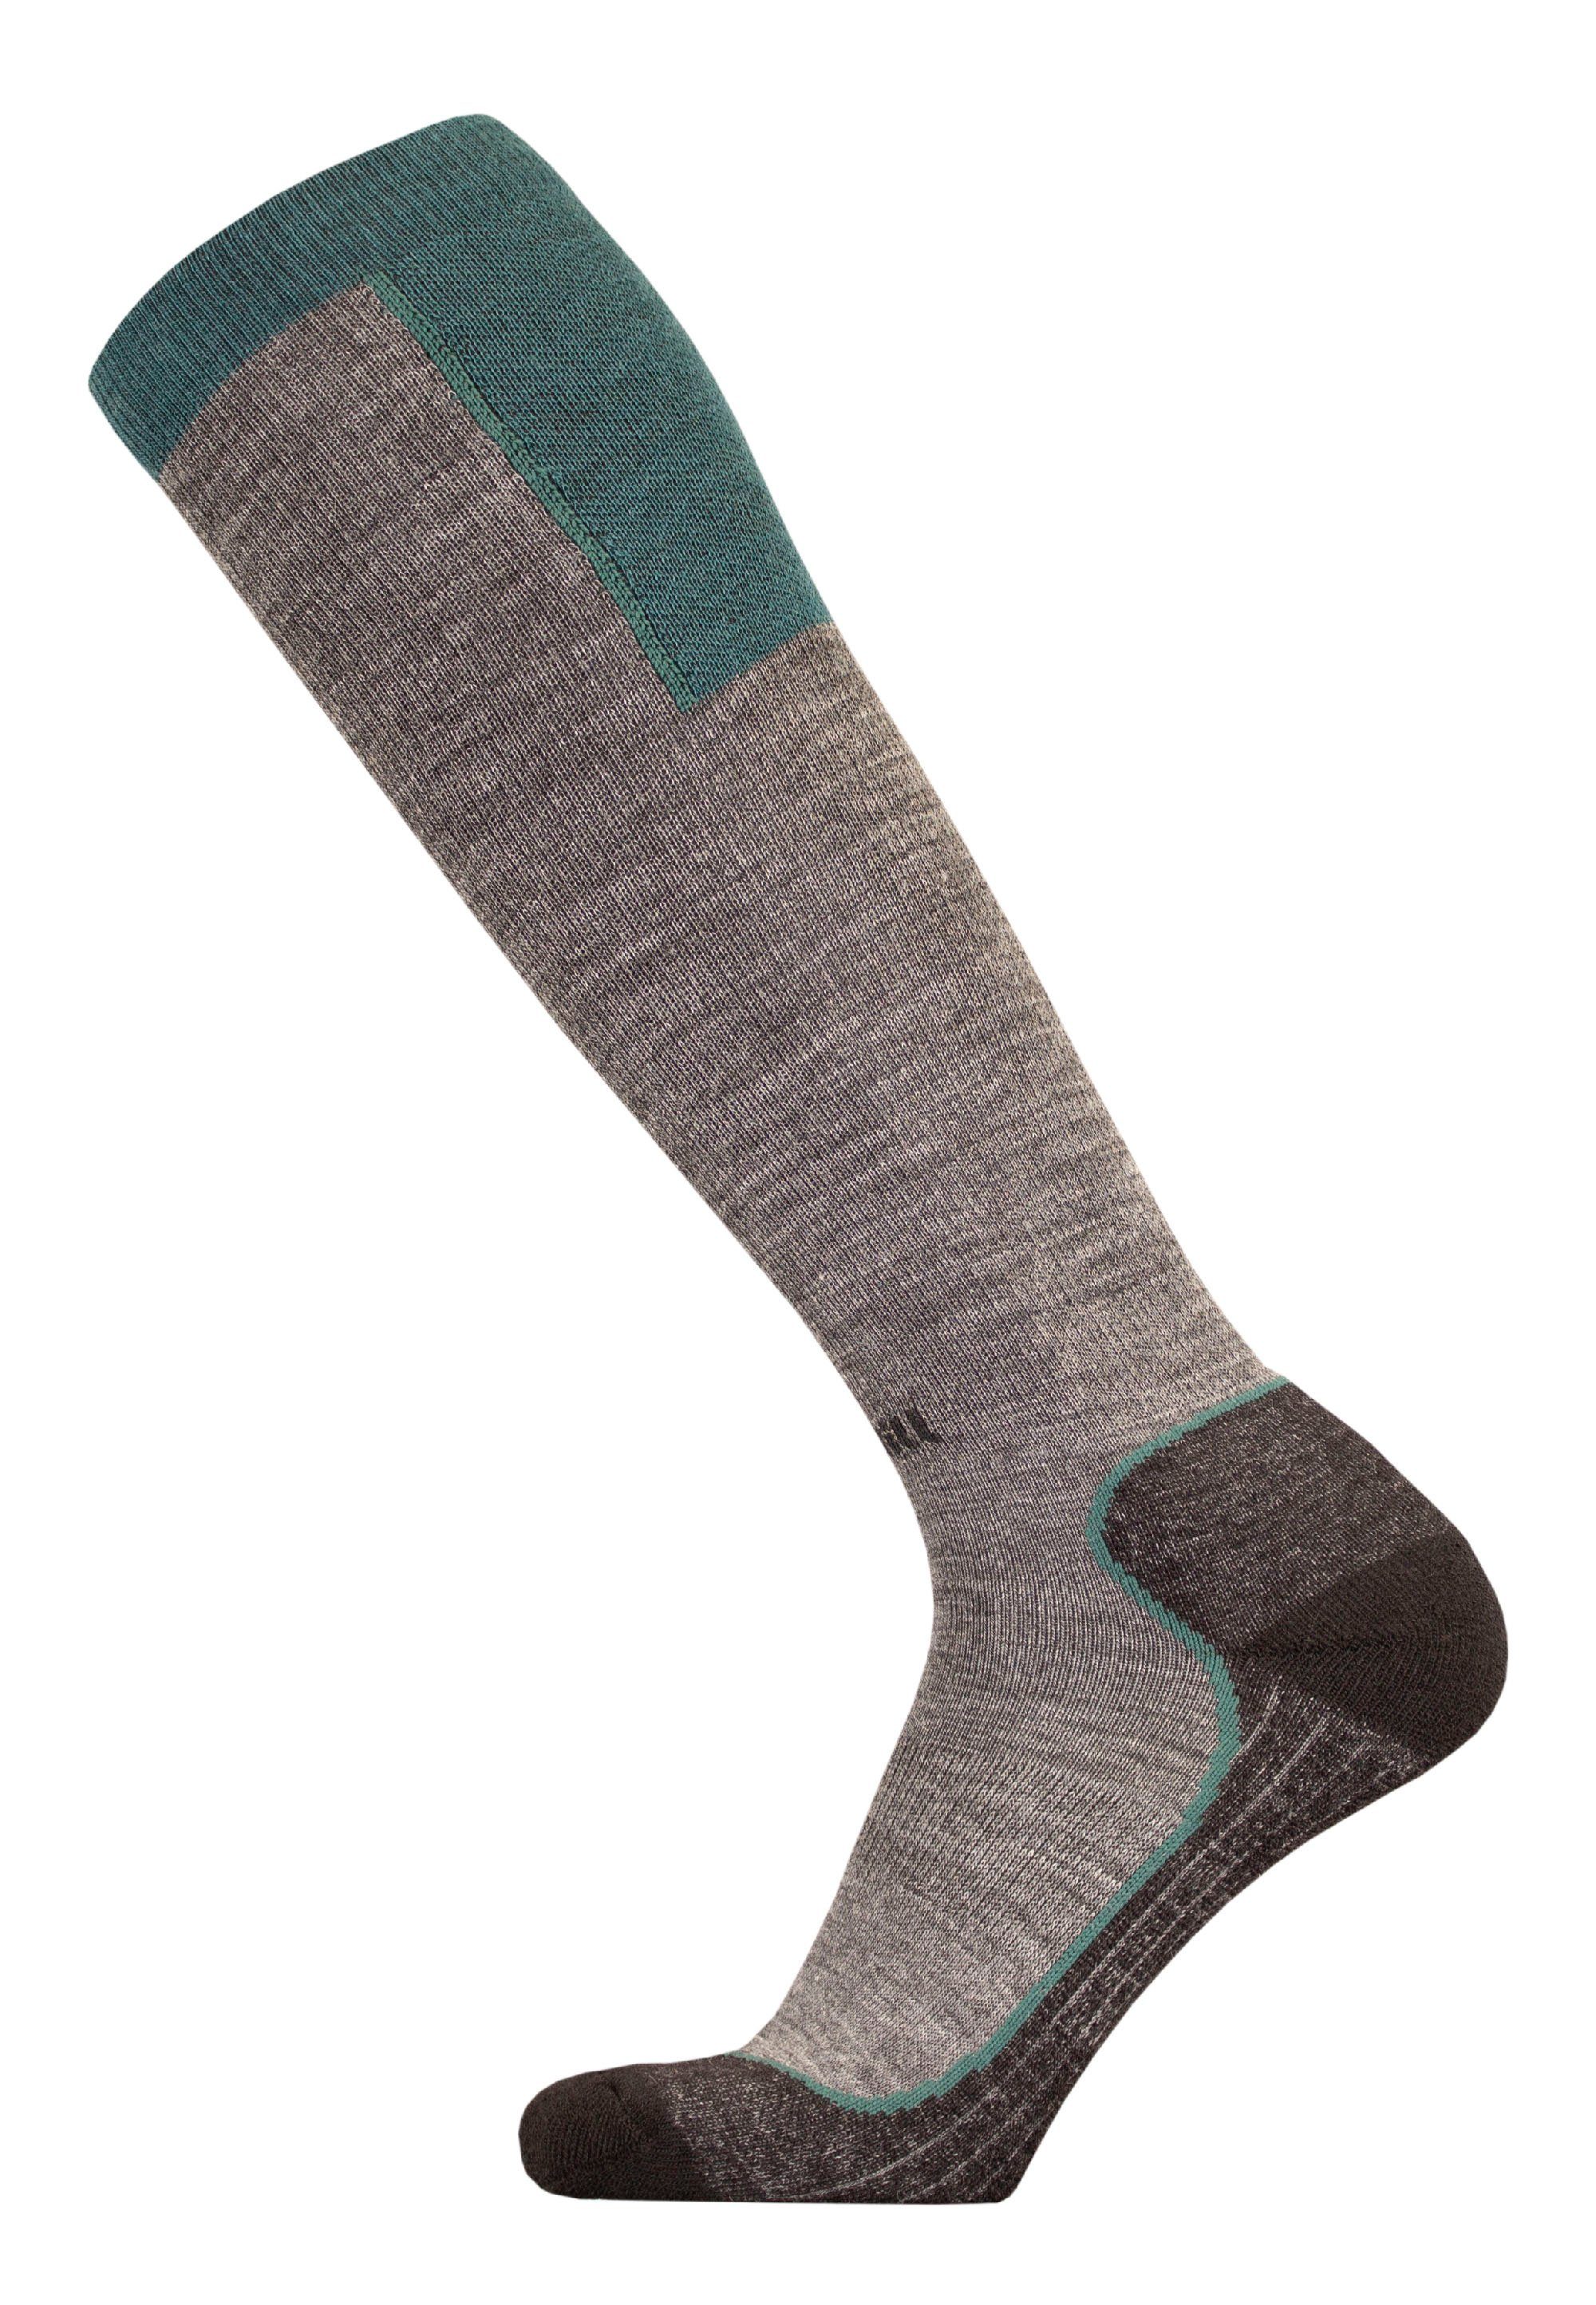 UphillSport Socken OUNA (1-Paar) mit mehrlagiger Struktur grau-grün